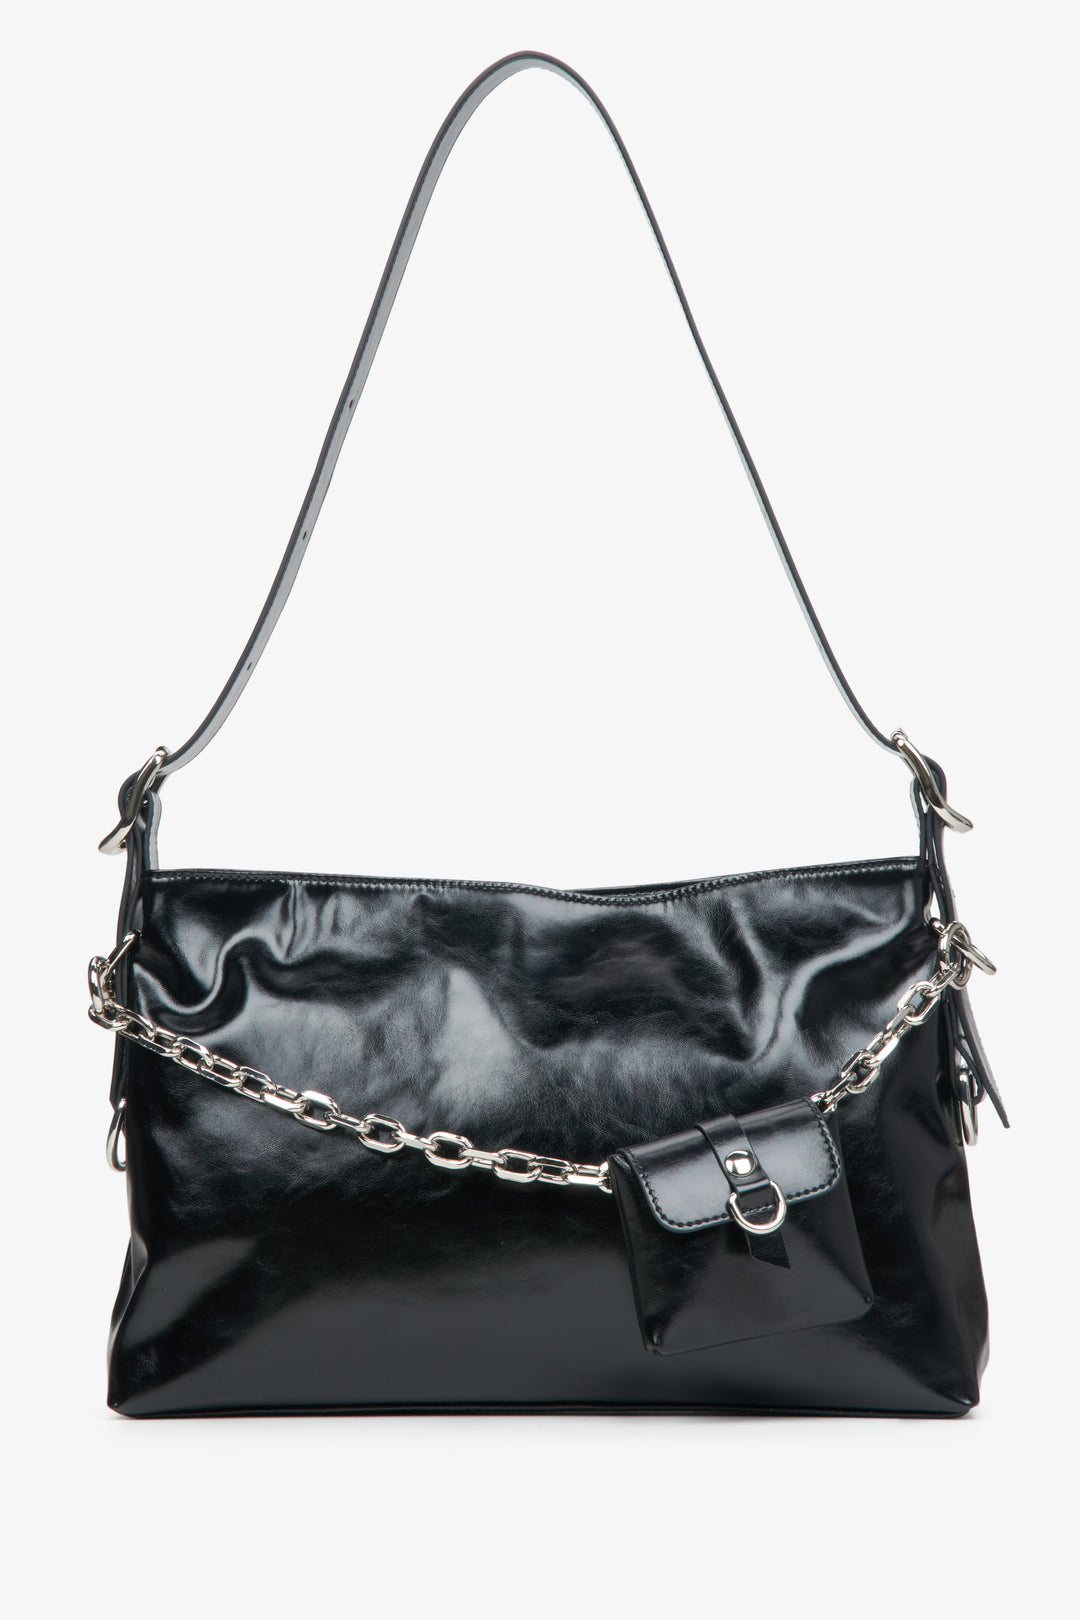 Women's Black Shoulder Bag with a Silver Chain Estro ER00114933.